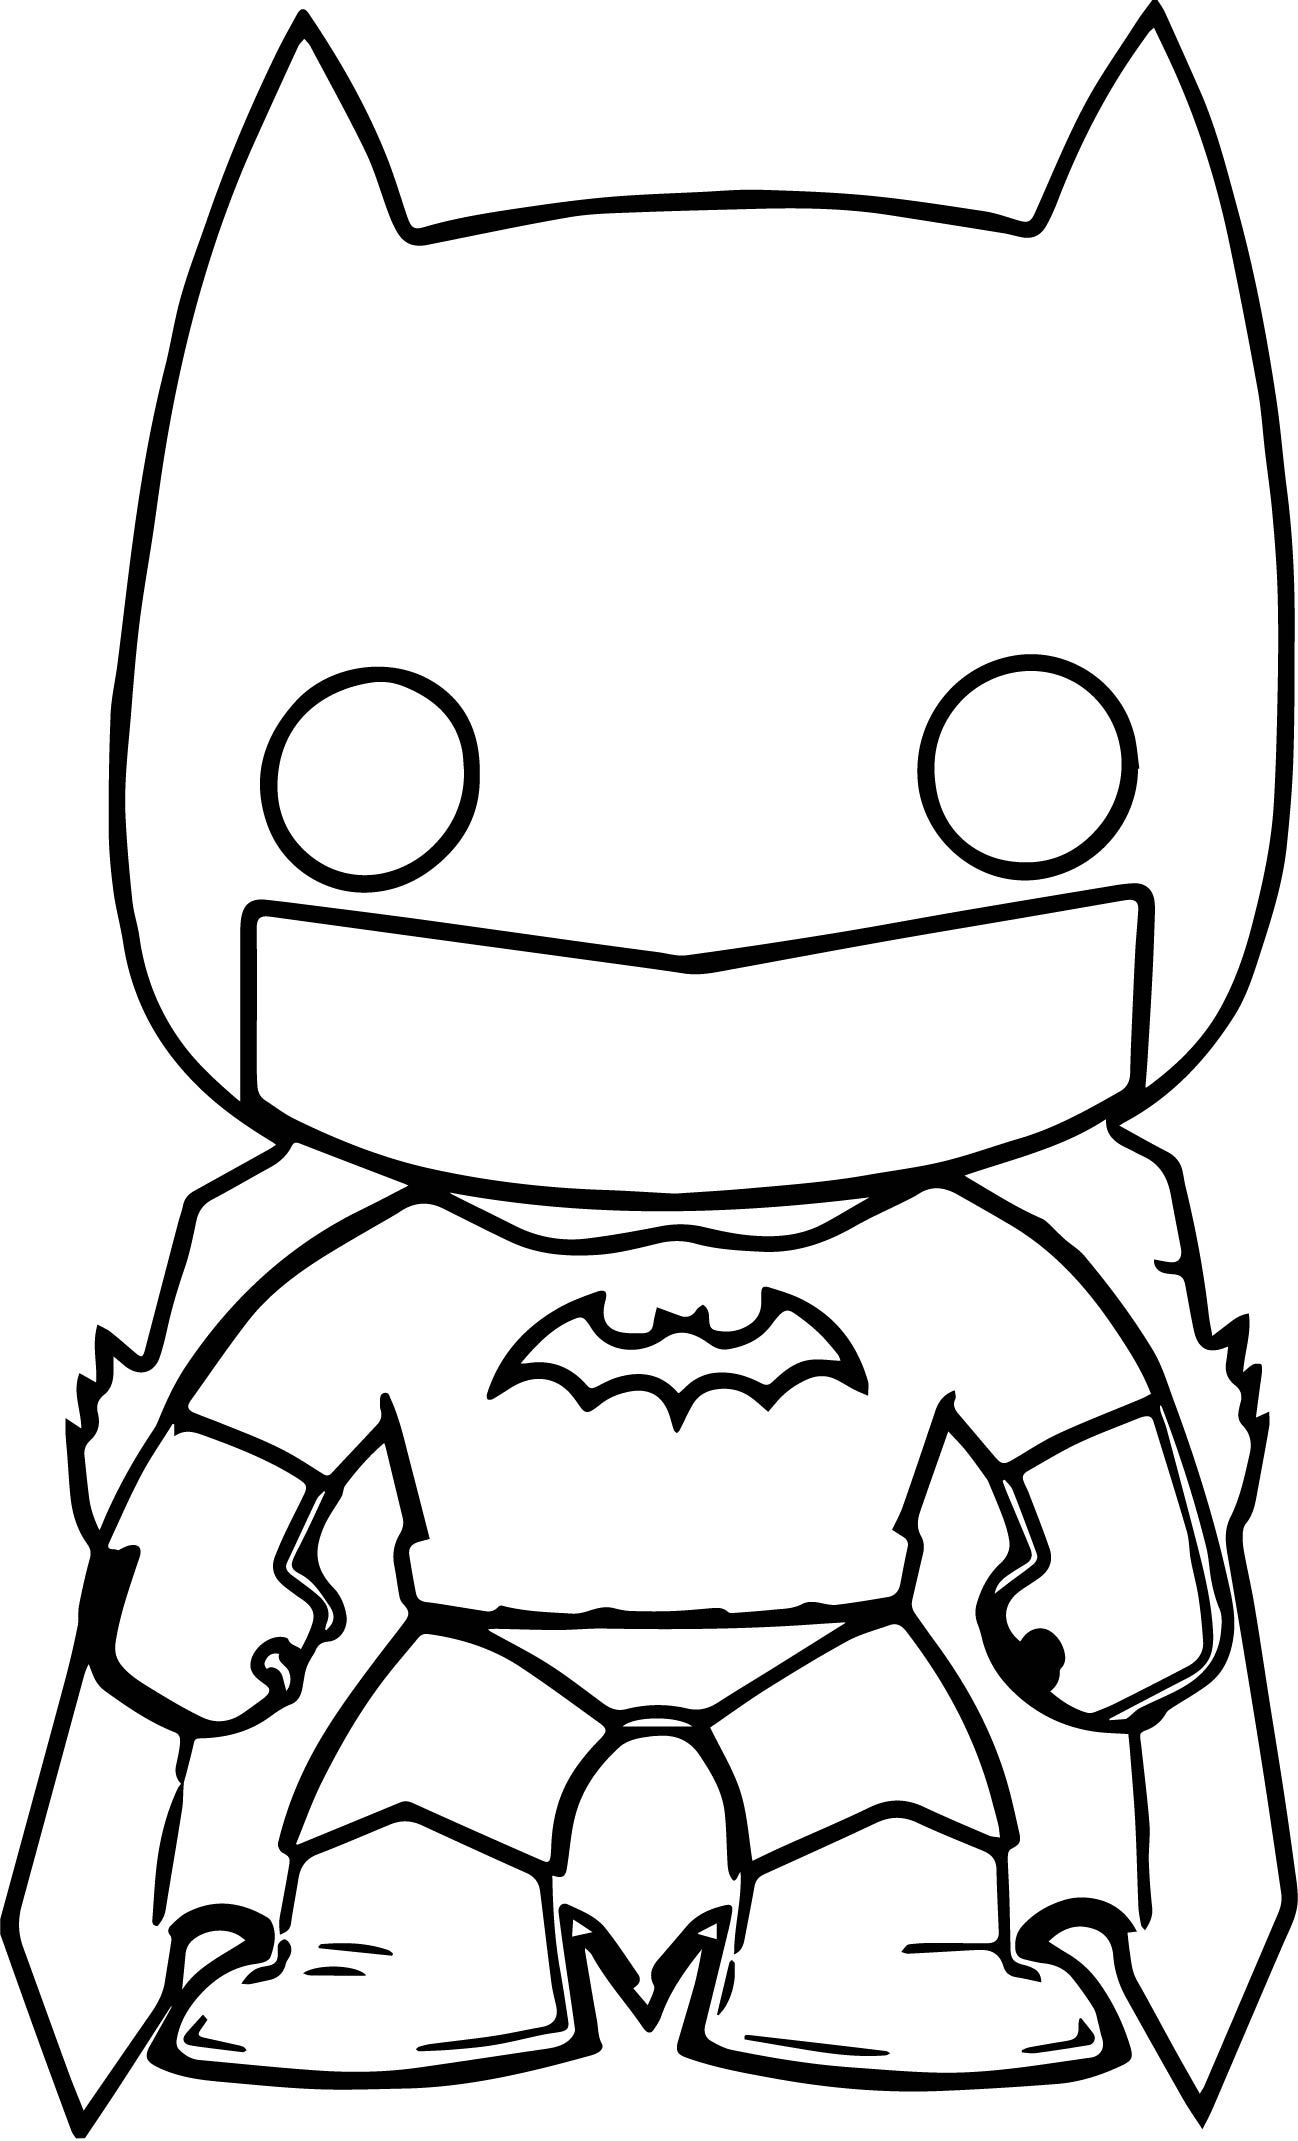 Cute Funko Pop Batman Coloring Page